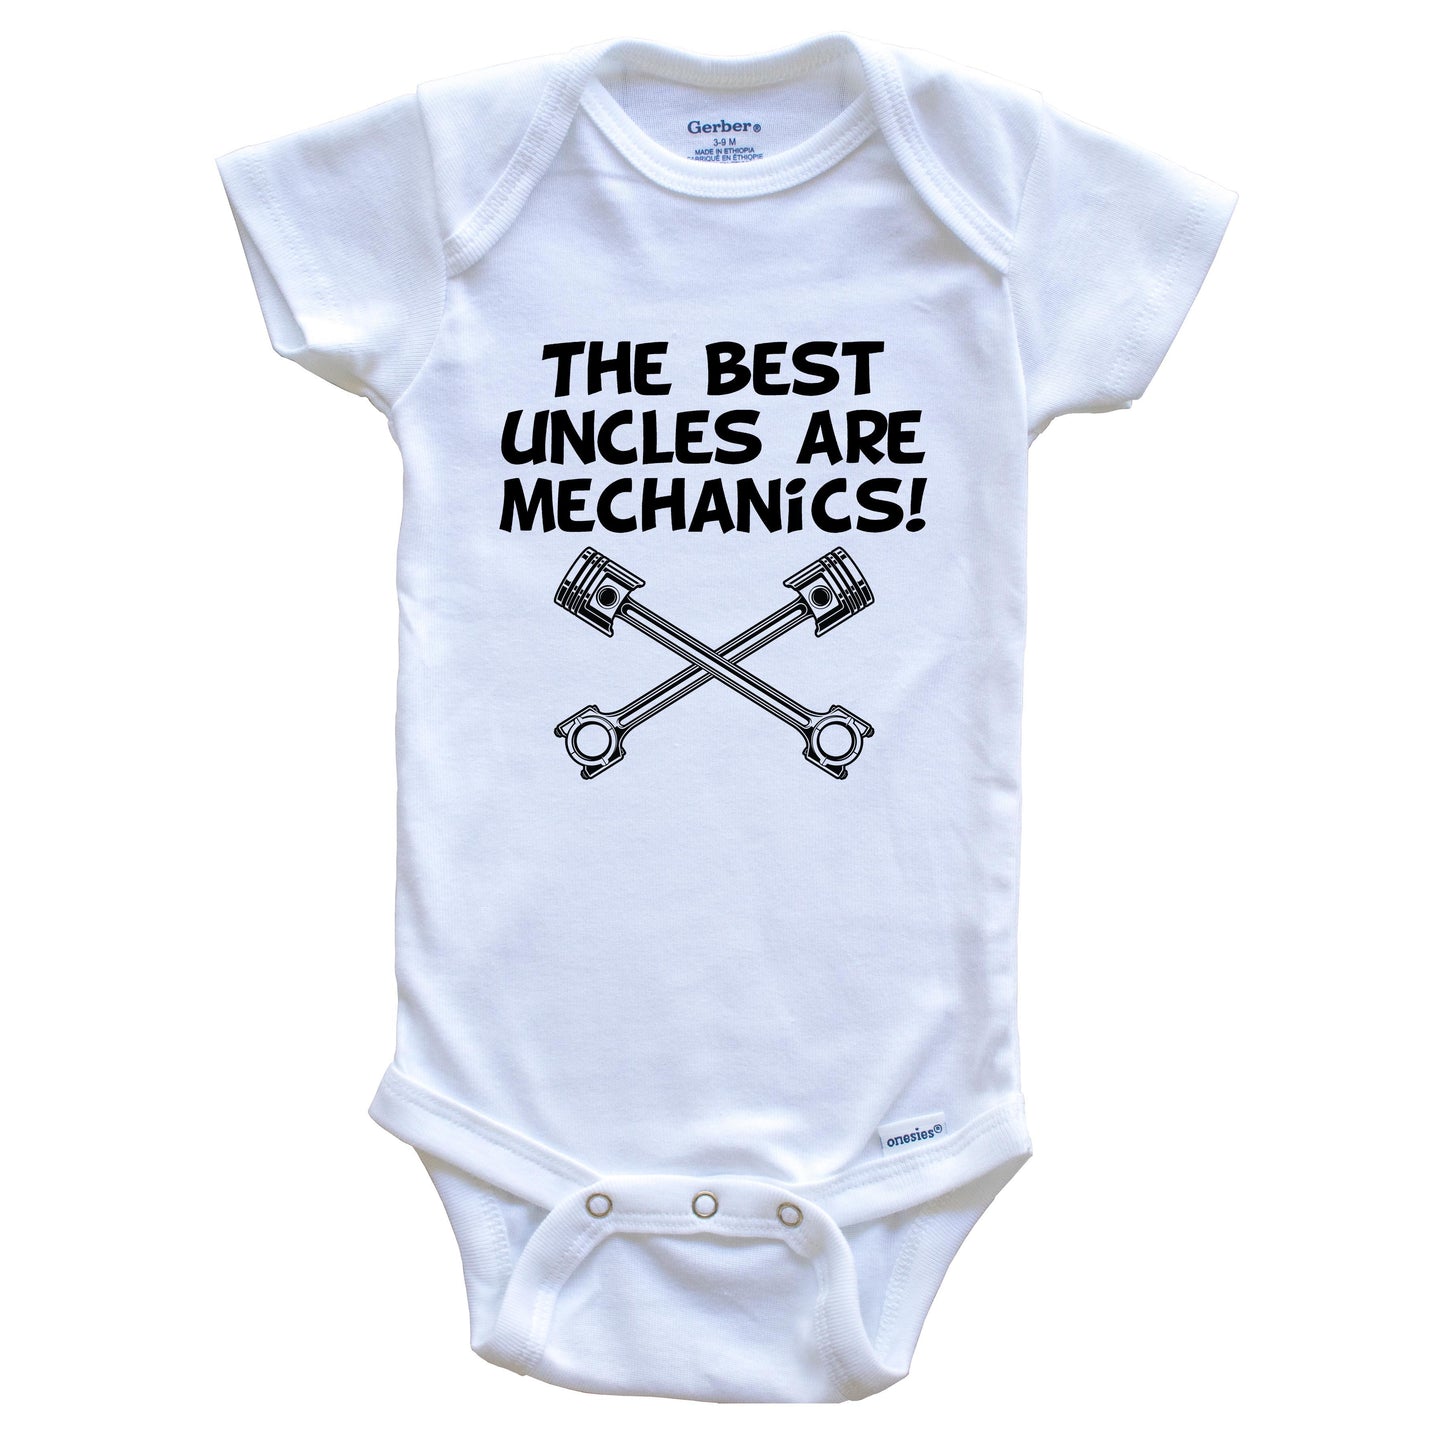 The Best Uncles Are Mechanics Funny Niece Nephew Baby Onesie